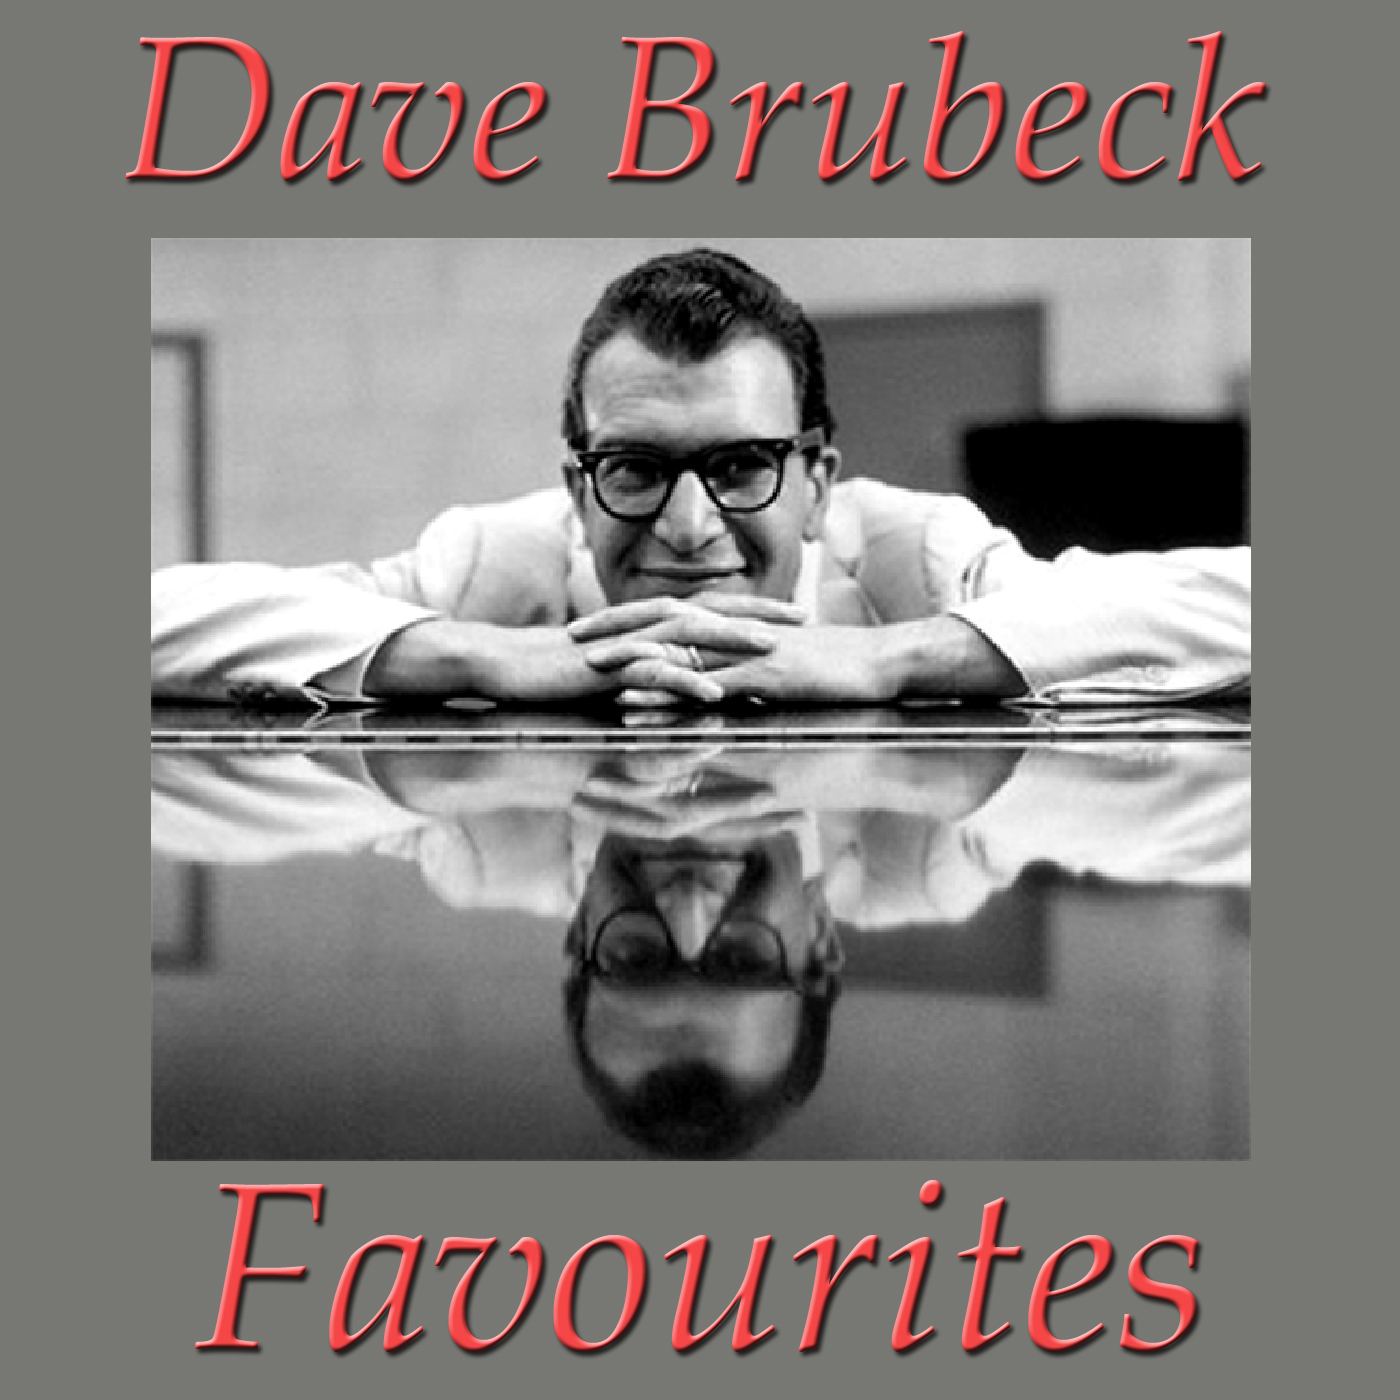 Dave Brubeck Favourites